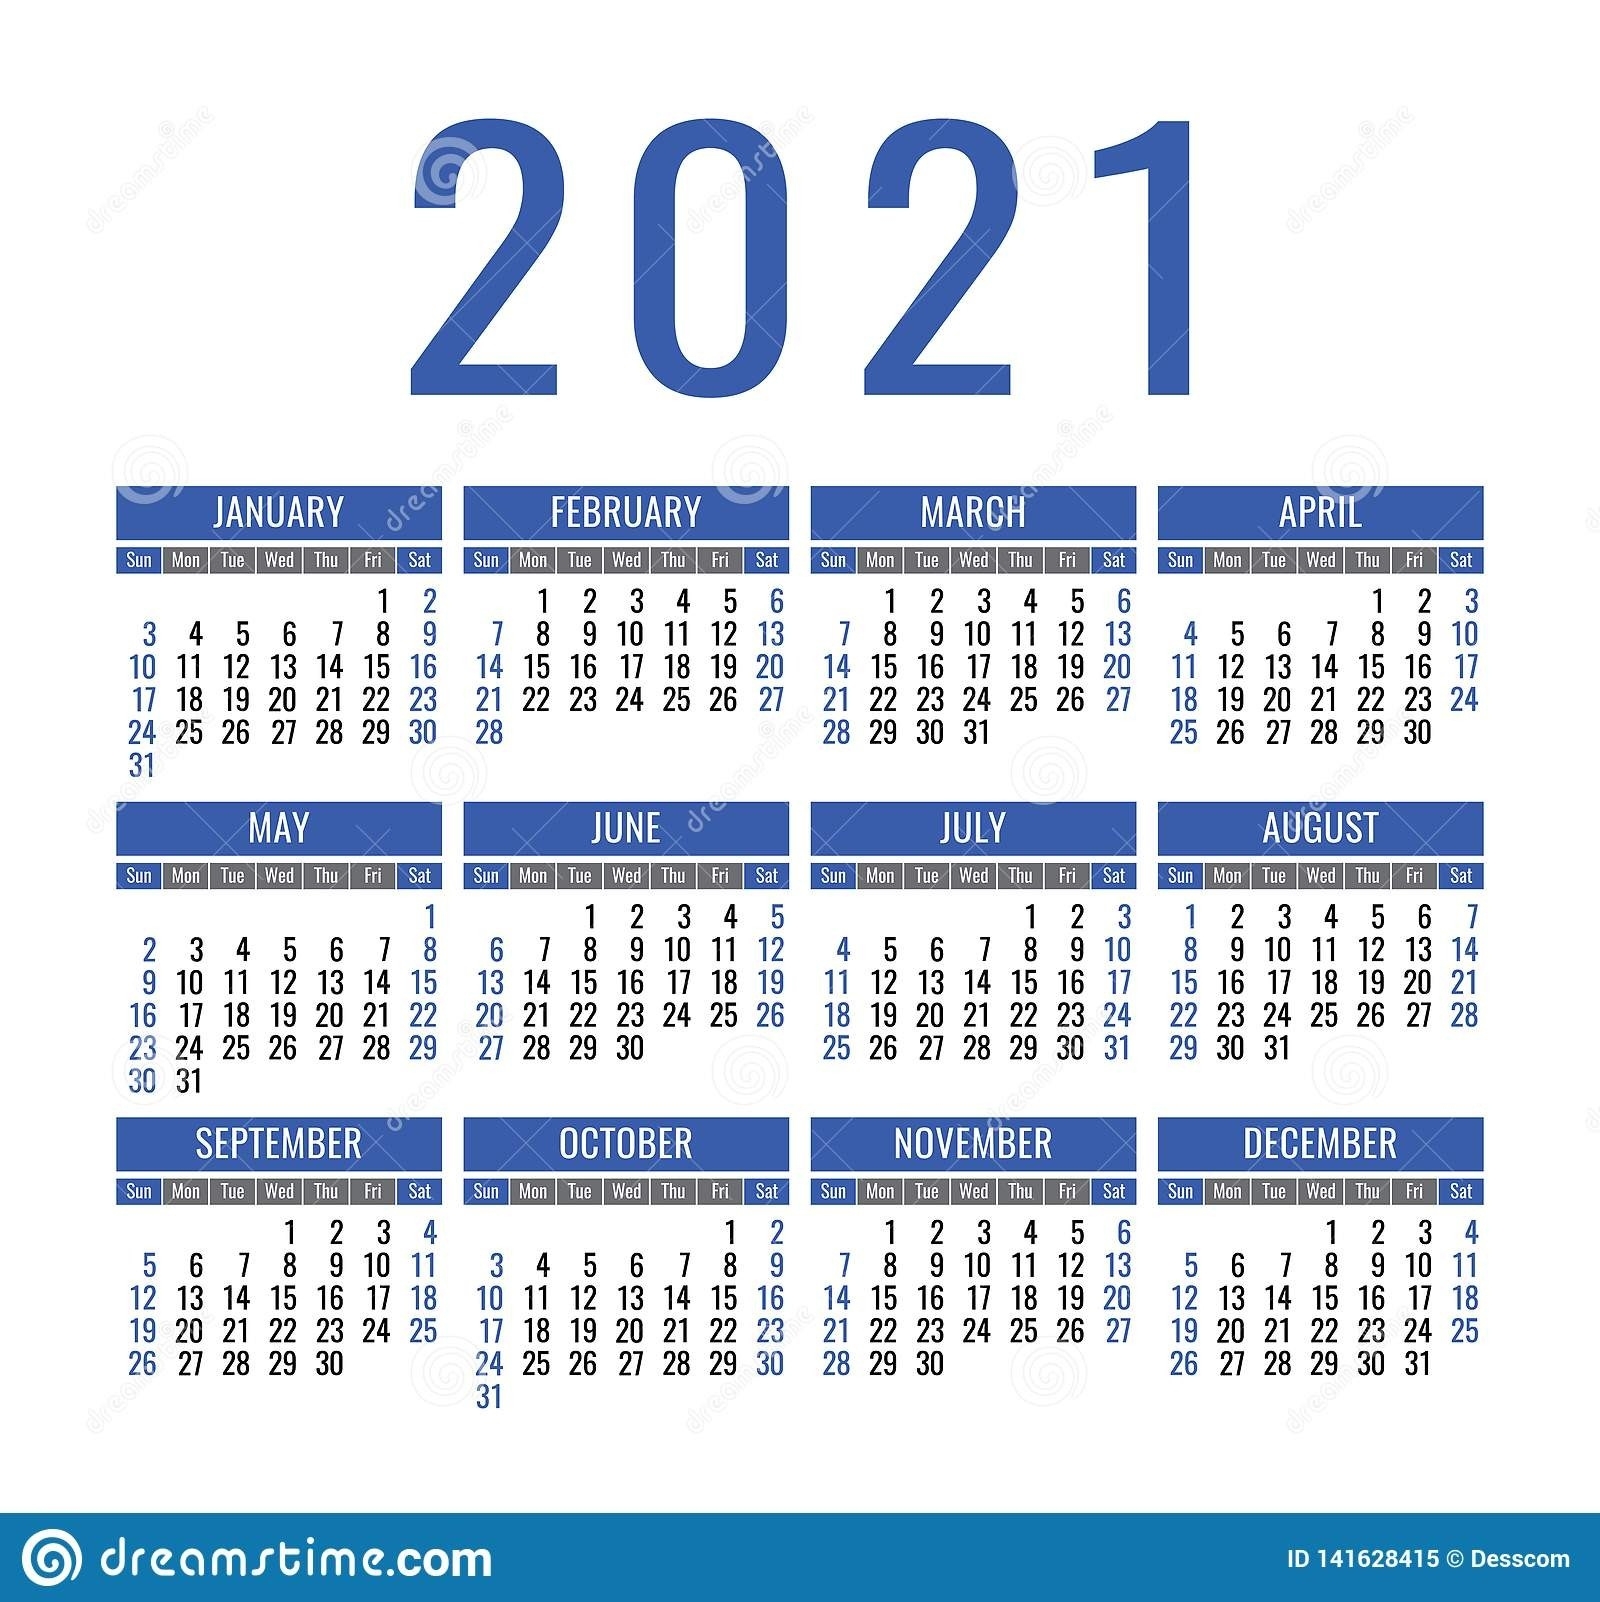 Broadcast Calendar 2021 | Calendar For Planning Broadcast Calendar 2021